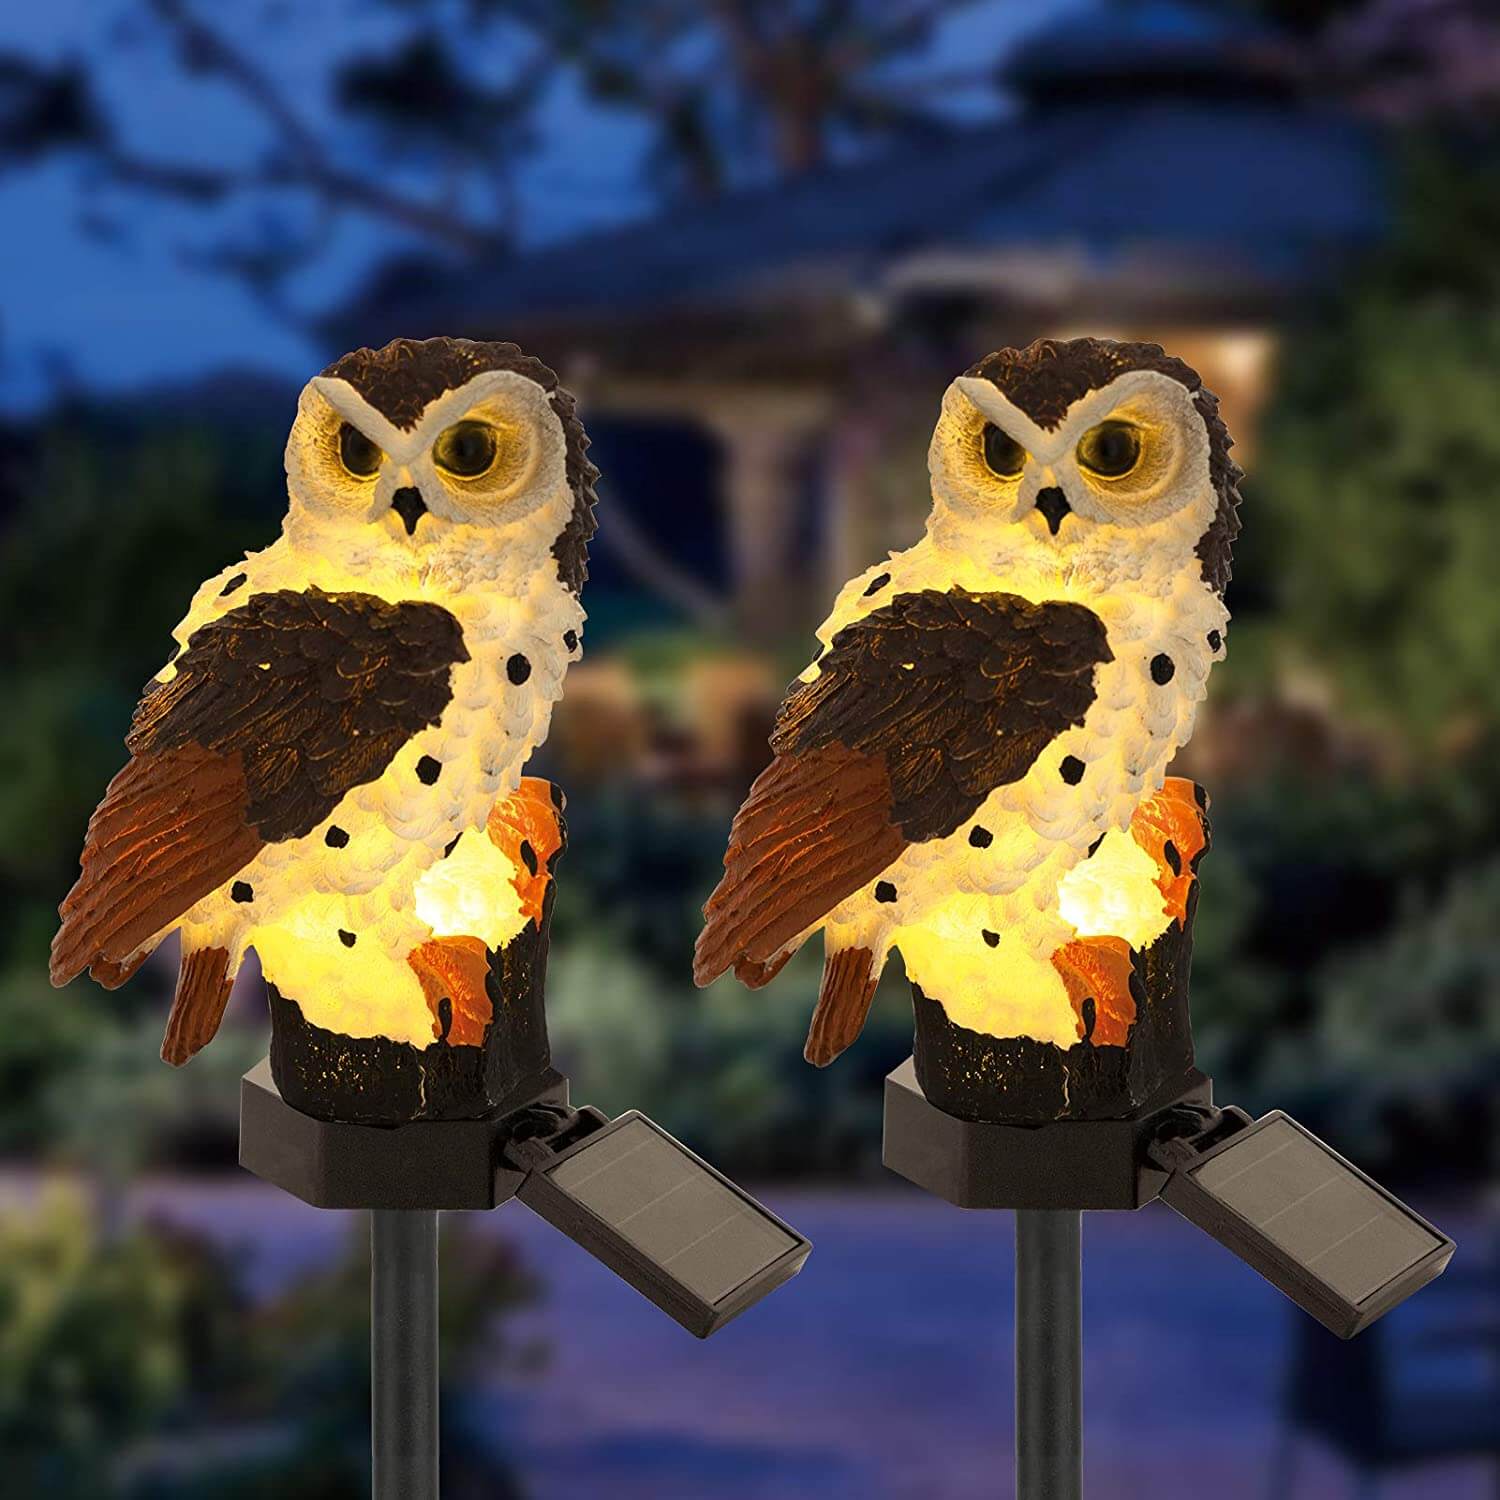 White N#S7 Solar Power LED Owl Lawn Light Waterproof Garden Landscape Lamp 